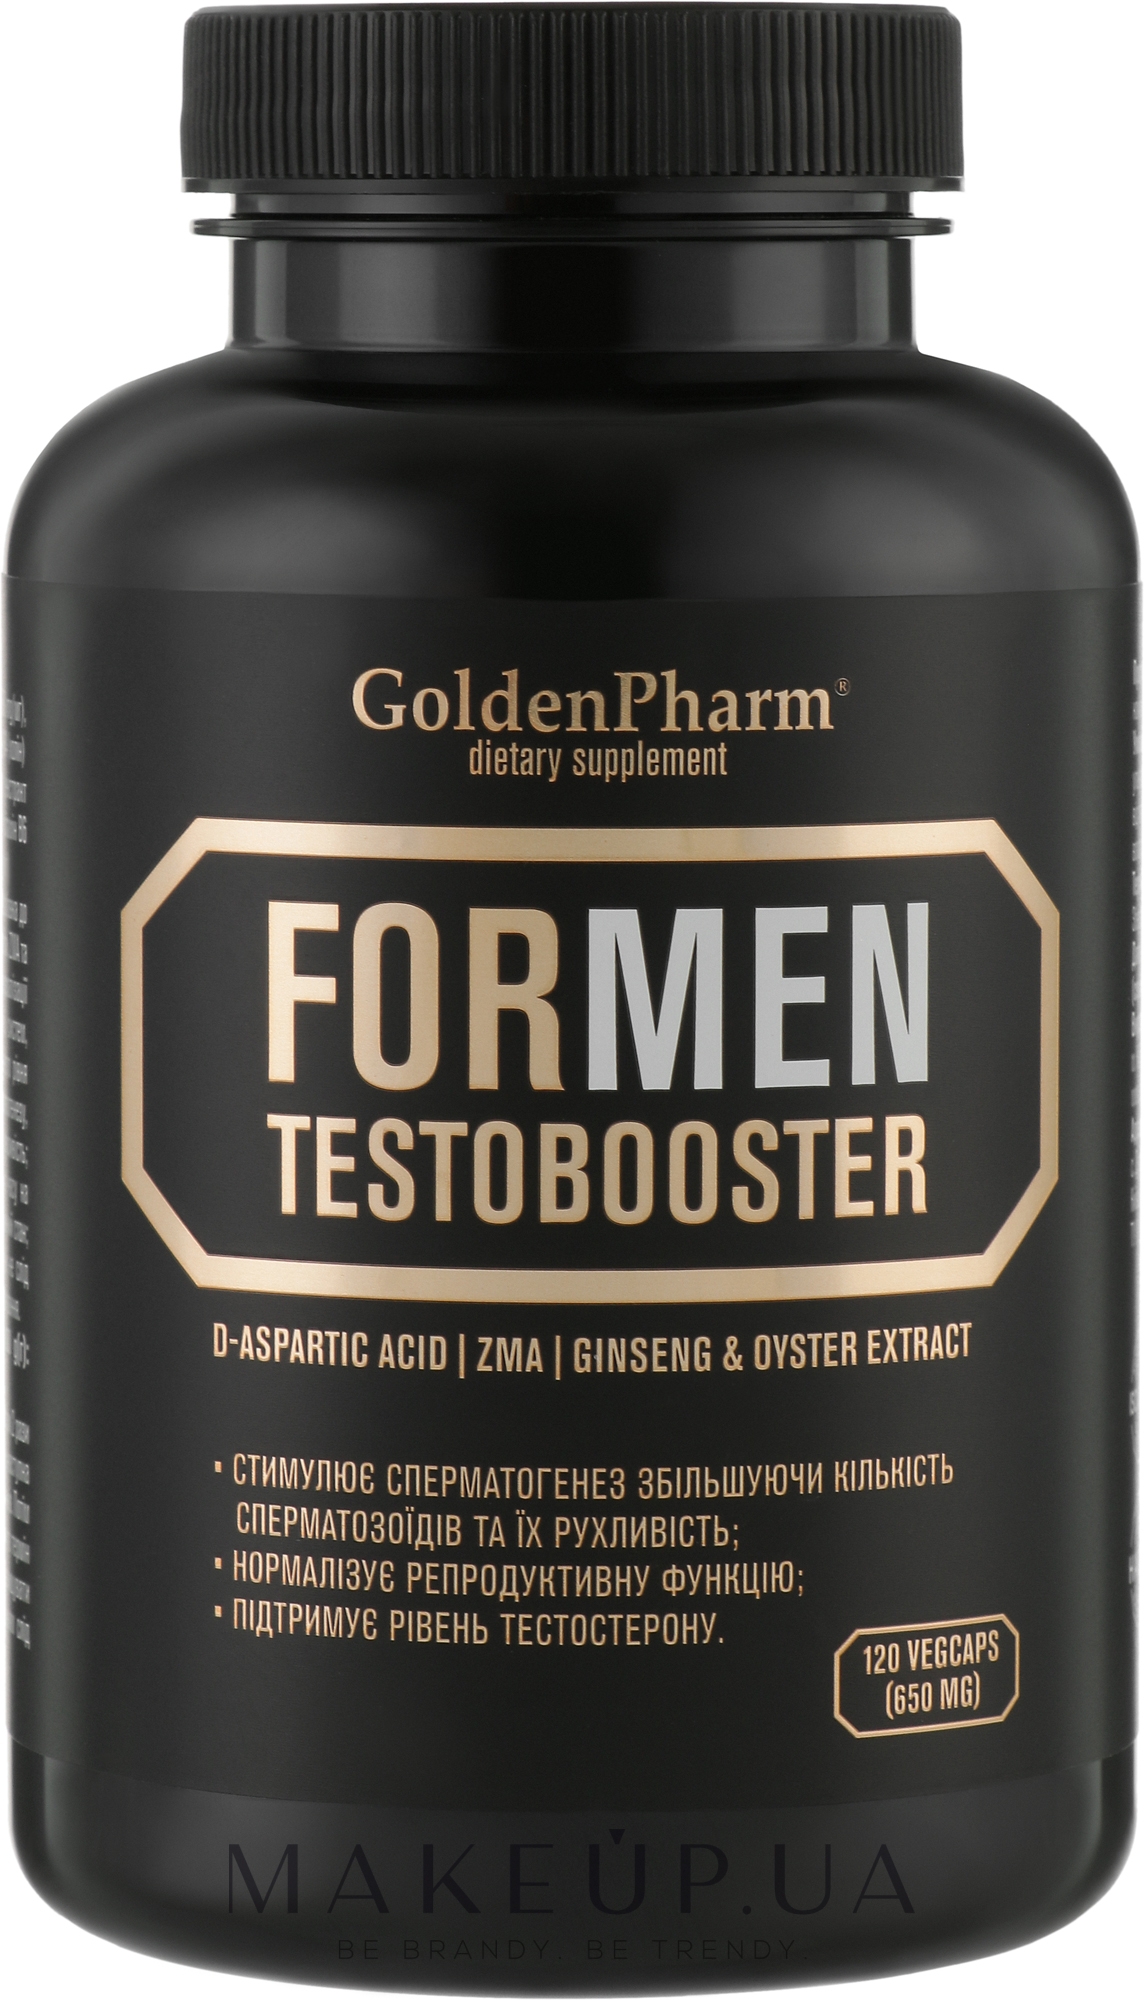 Диетическая добавка "Тестобустер для мужчин", капсулы 650 мг - Голден-Фарм — фото 120шт